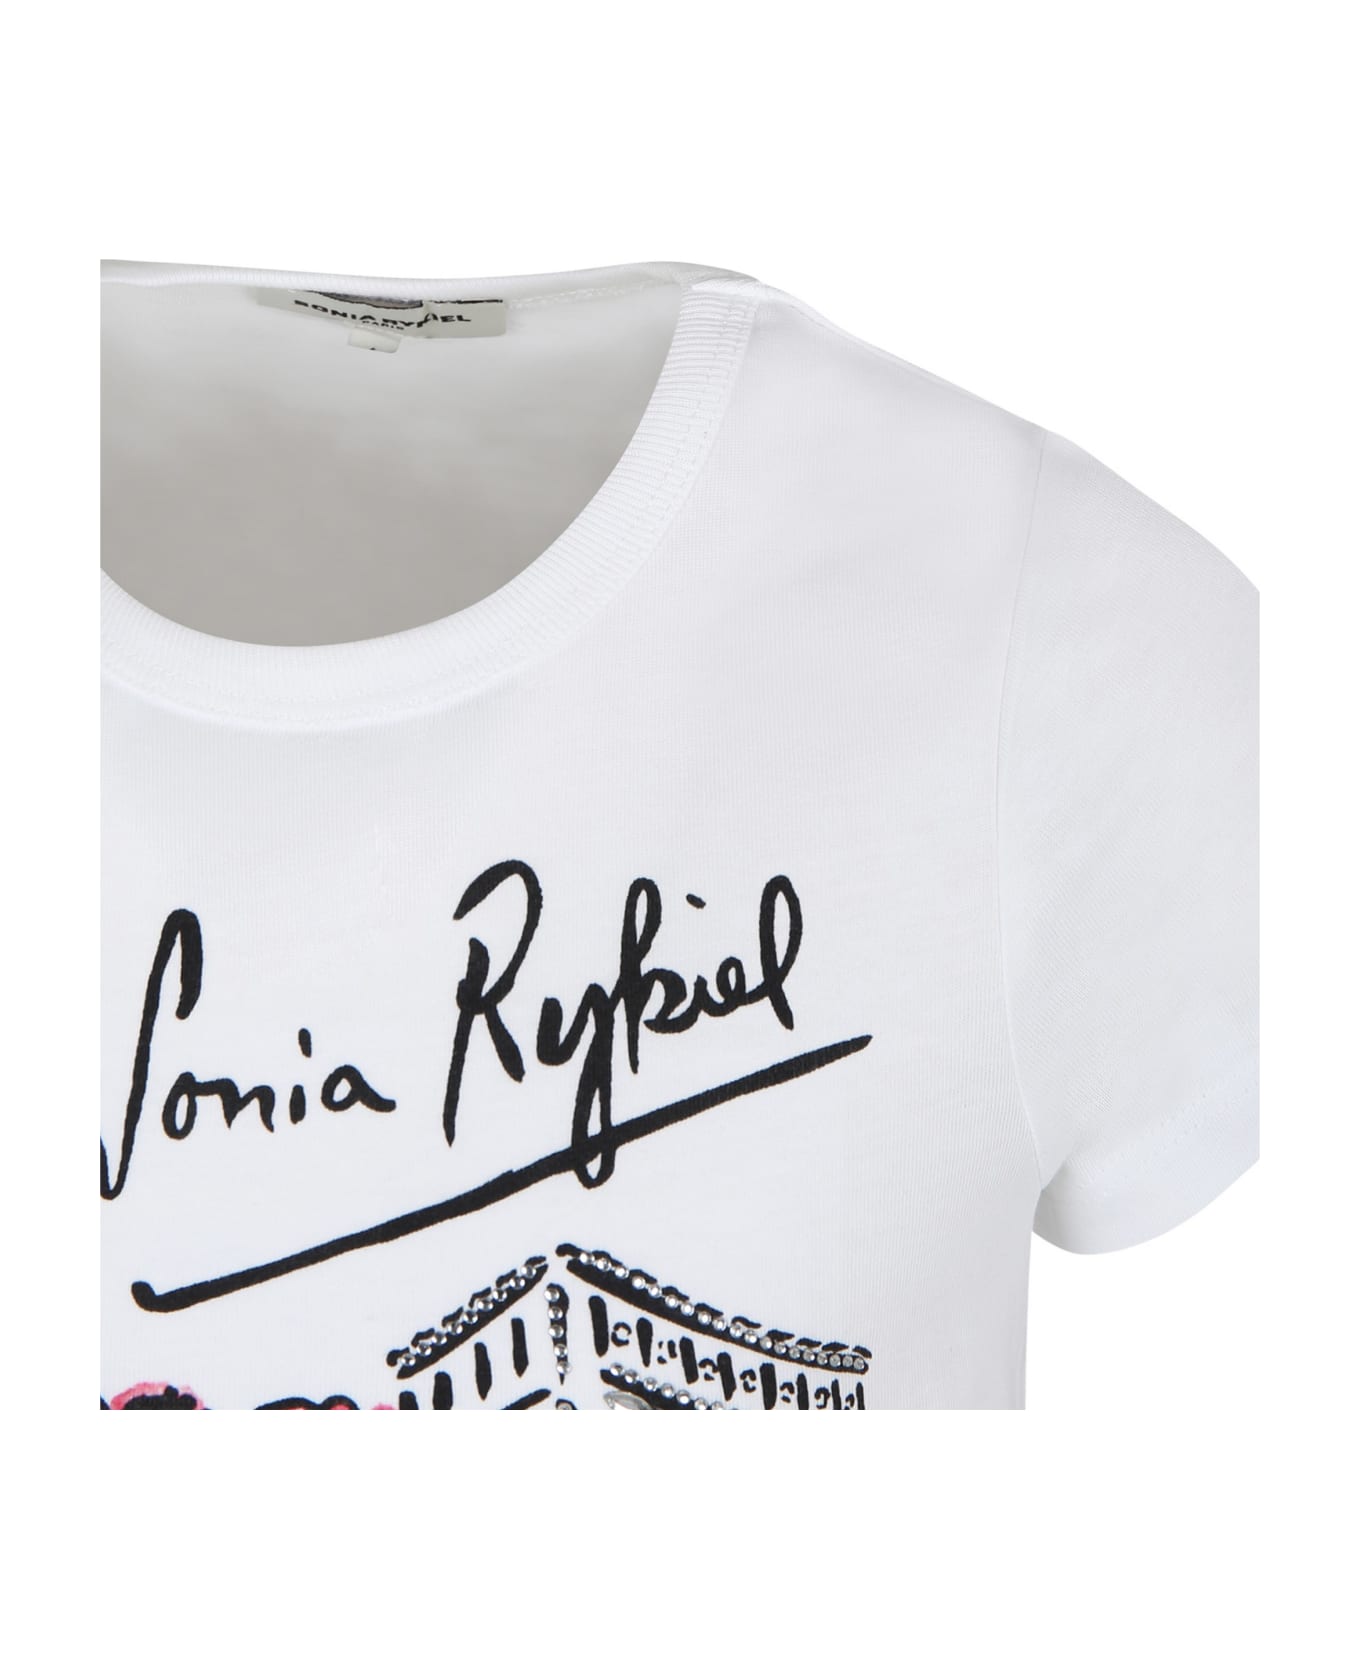 Rykiel Enfant White T-shirt For Girl With Tour Eiffel Print And Rhinestones - Ivory